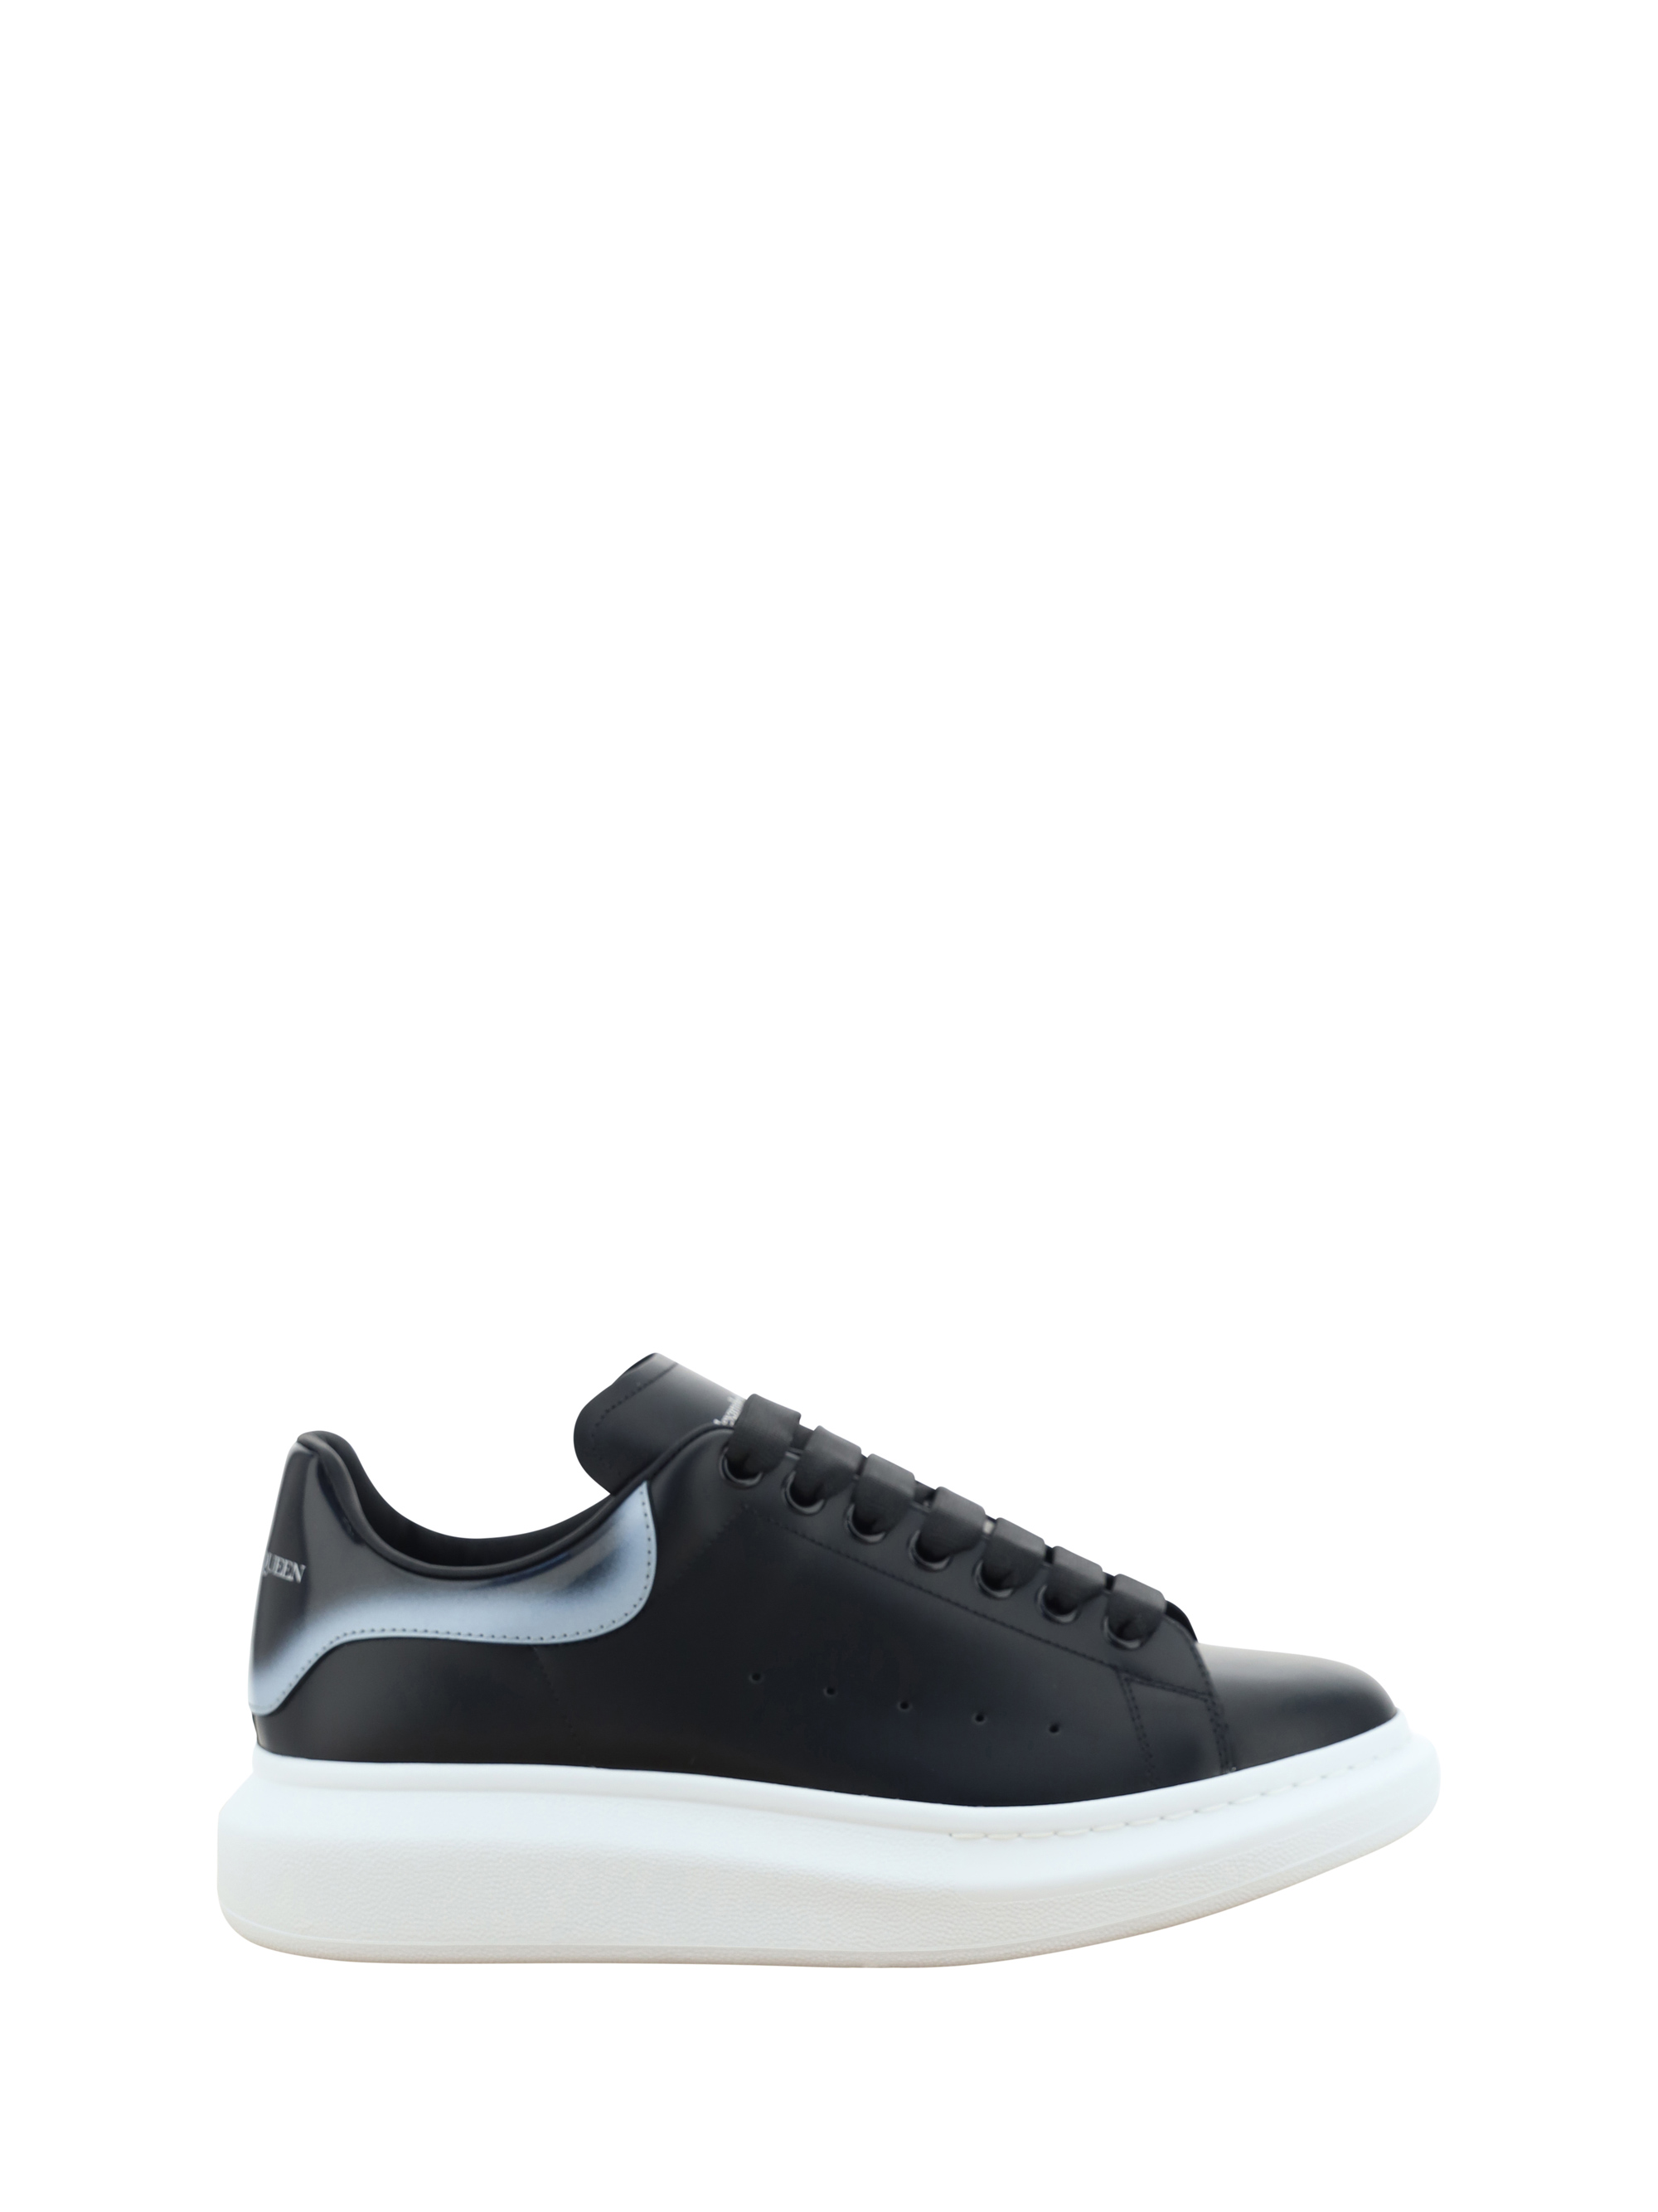 Alexander Mcqueen Sneakers In Black/black/silver